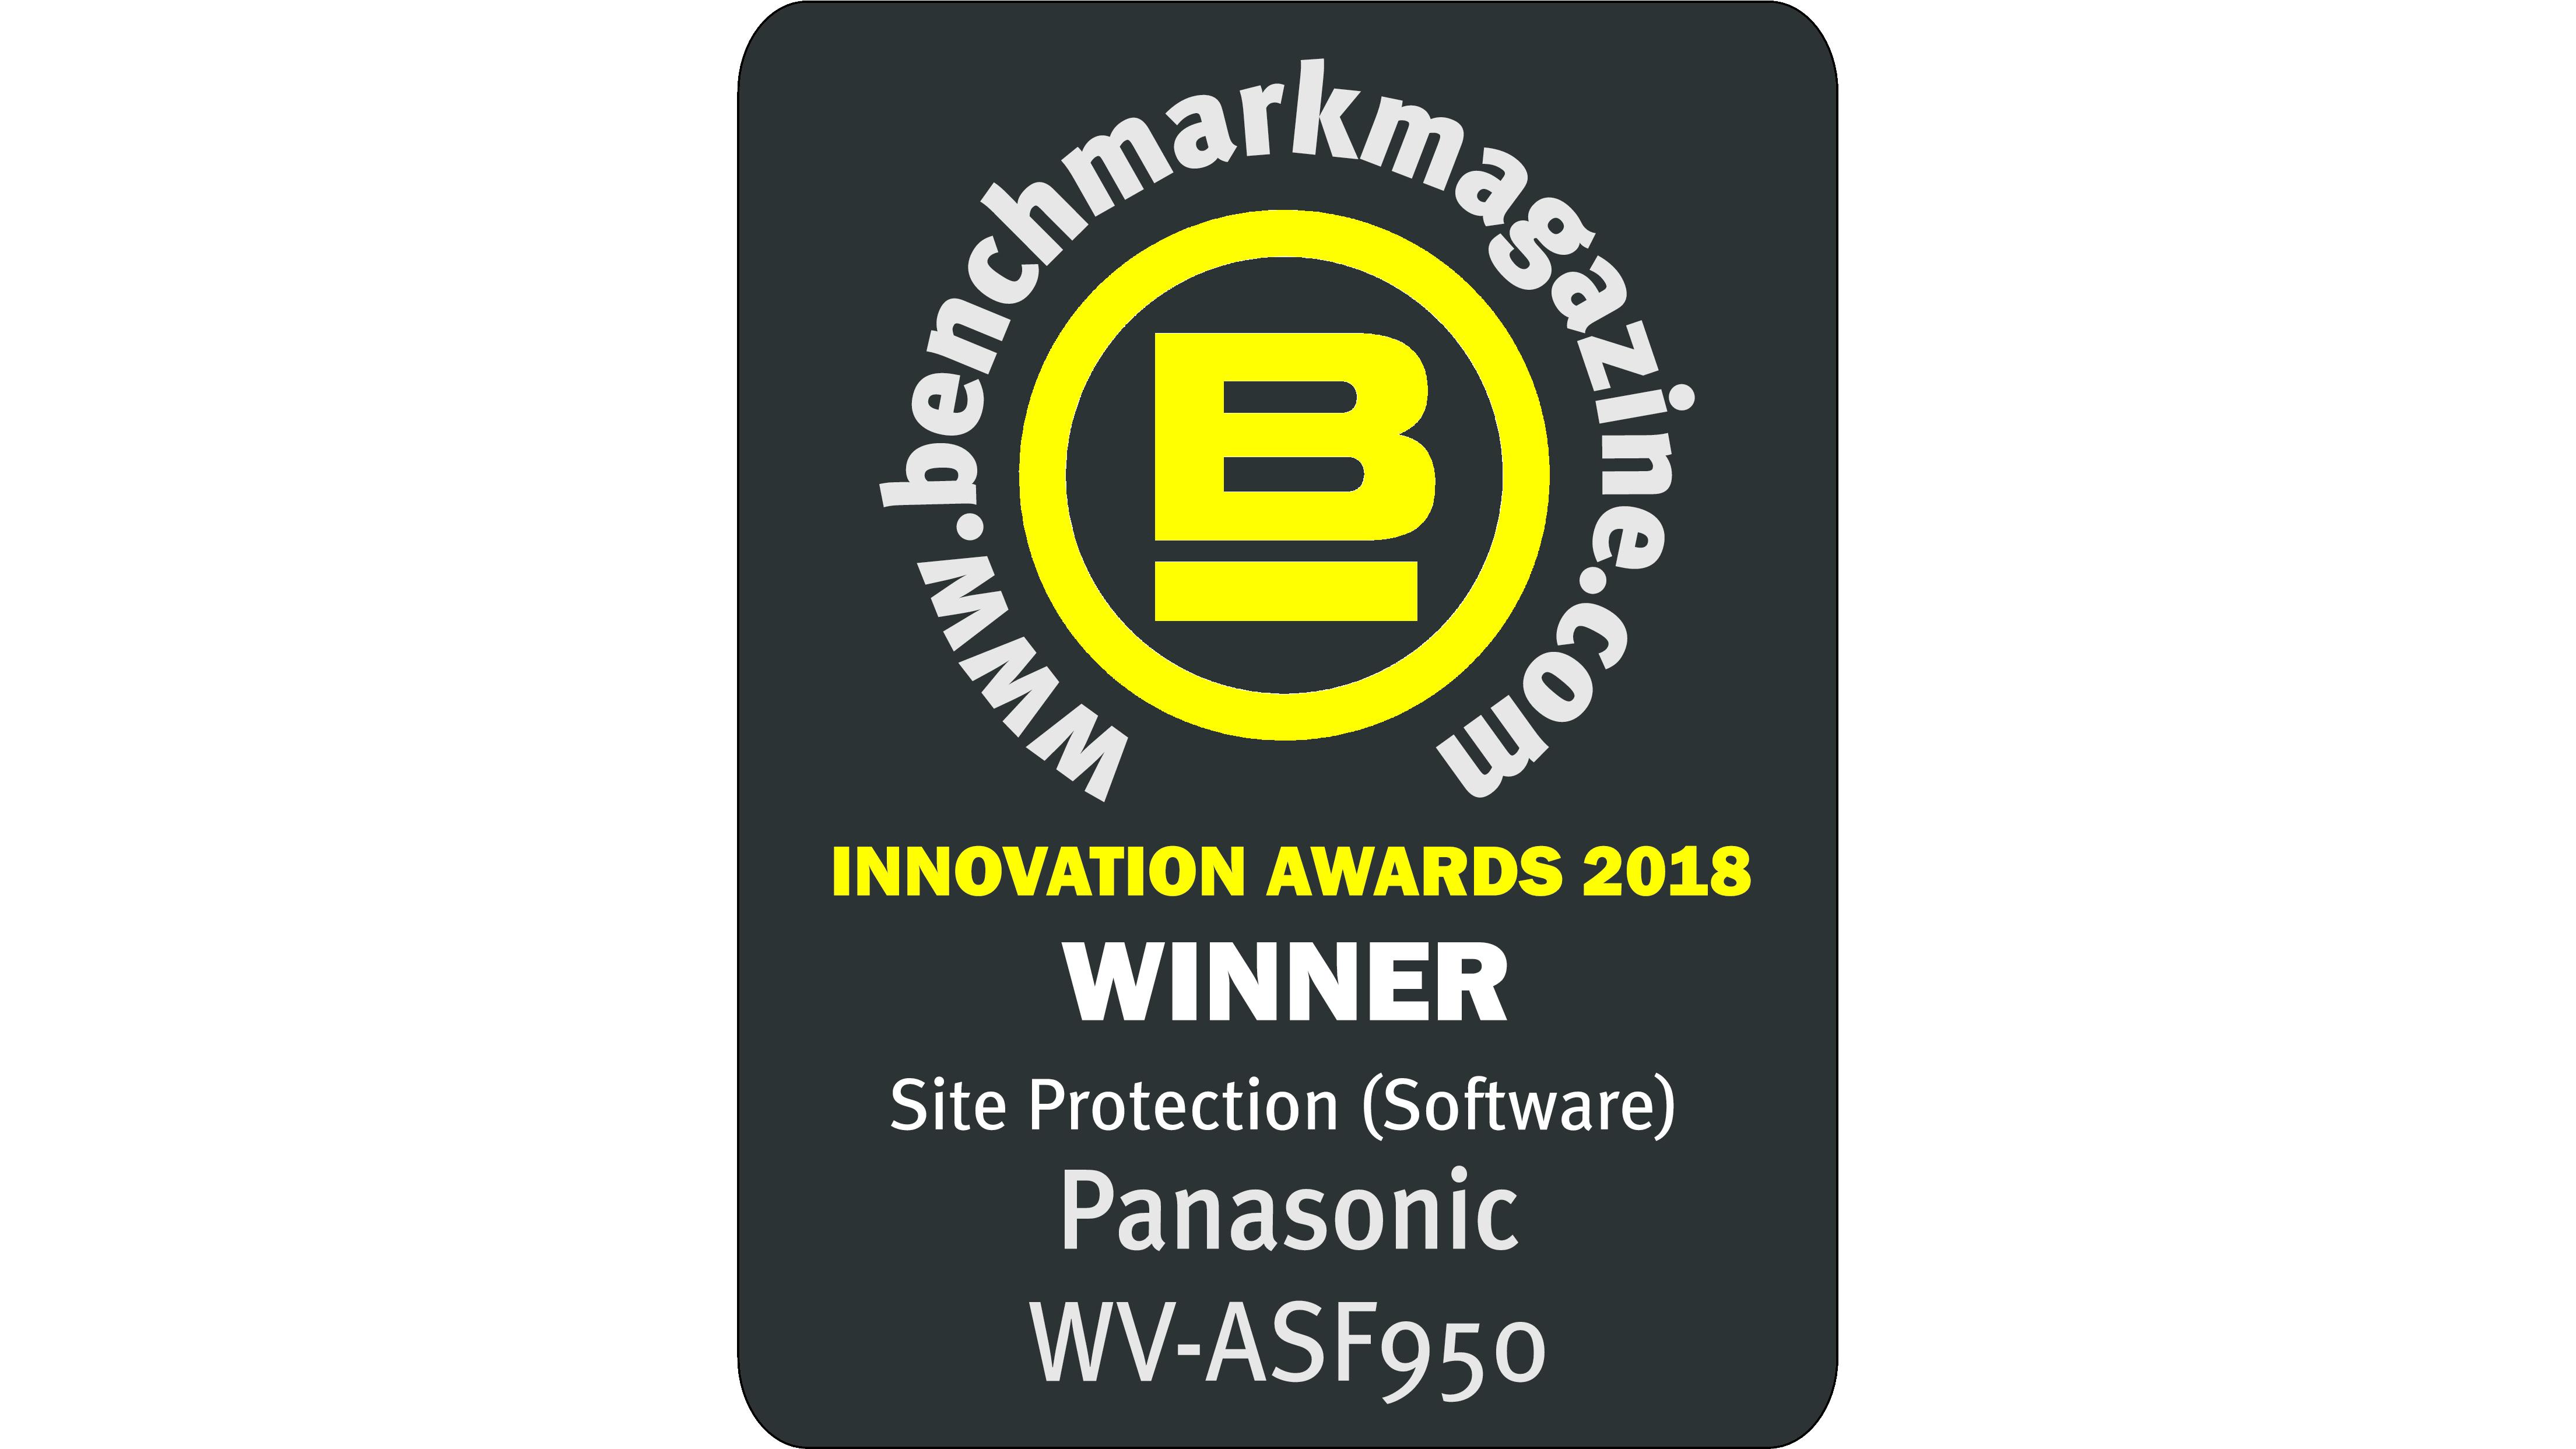 image: Benchmark Innovation Award logo